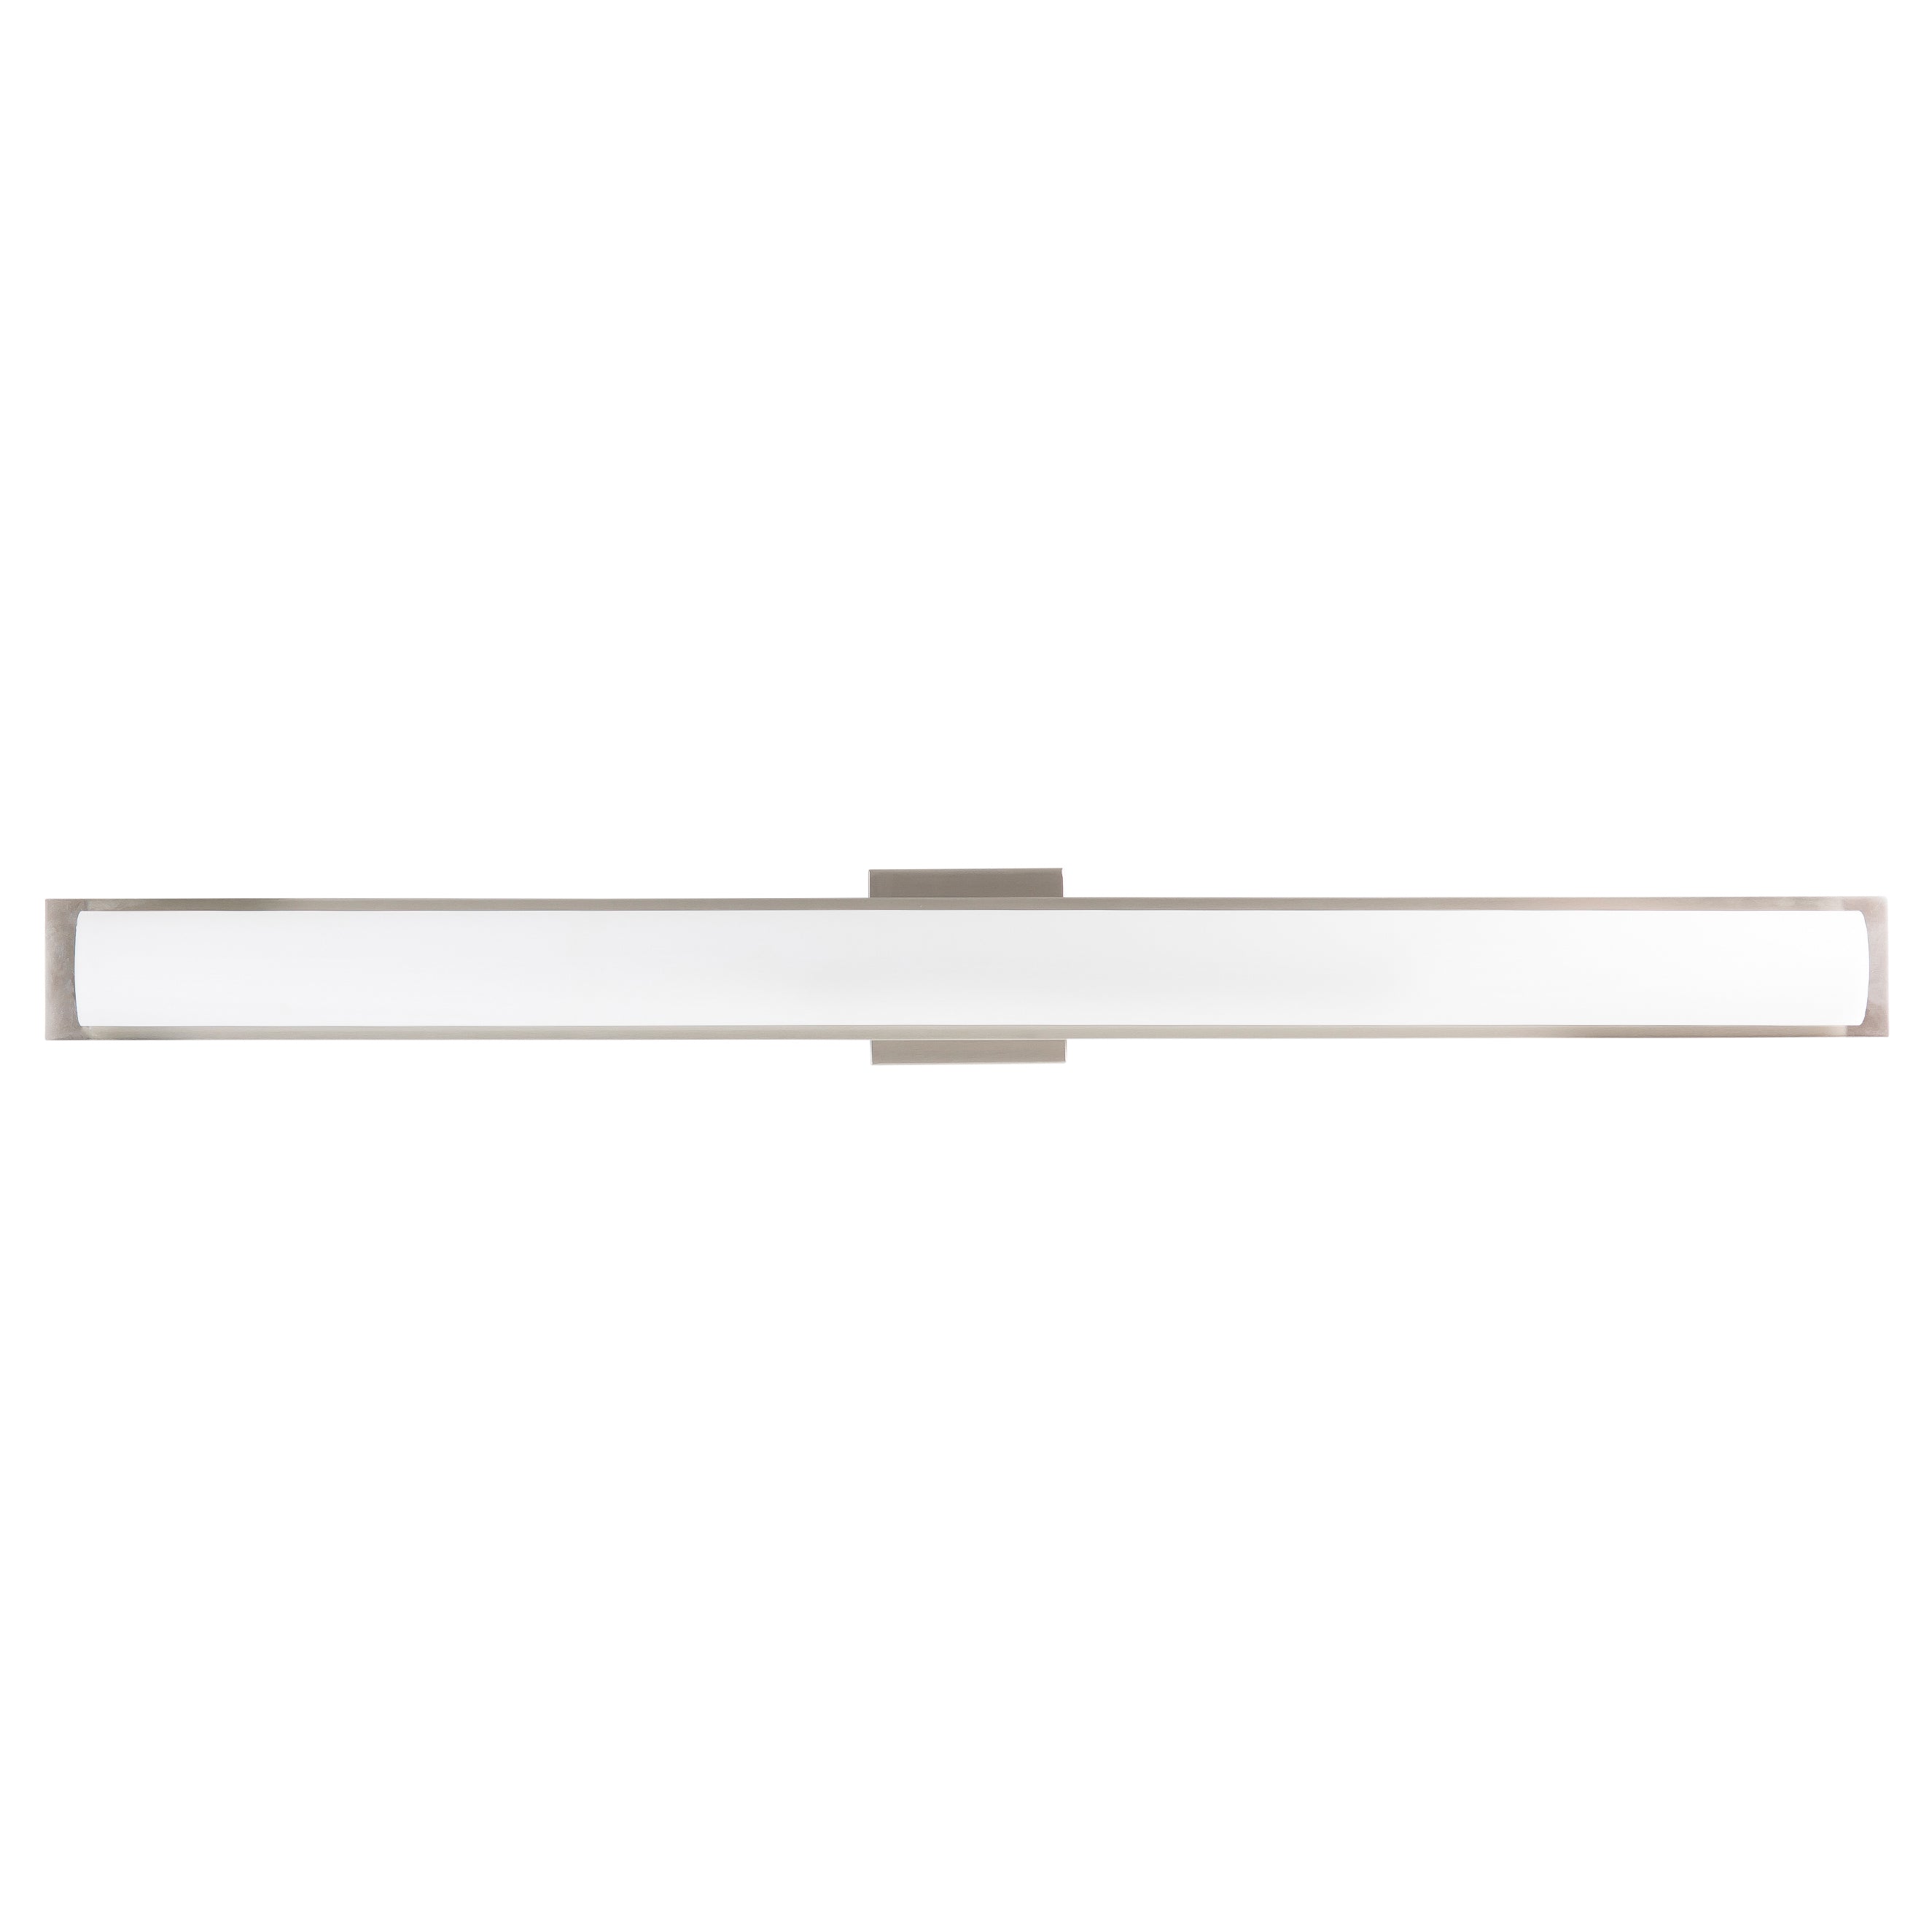 Portico 42 inch LED Bathroom Vanity Light, Integrated LED Light Strip  Linea Lighting Modern and Affordable Residential Lighting